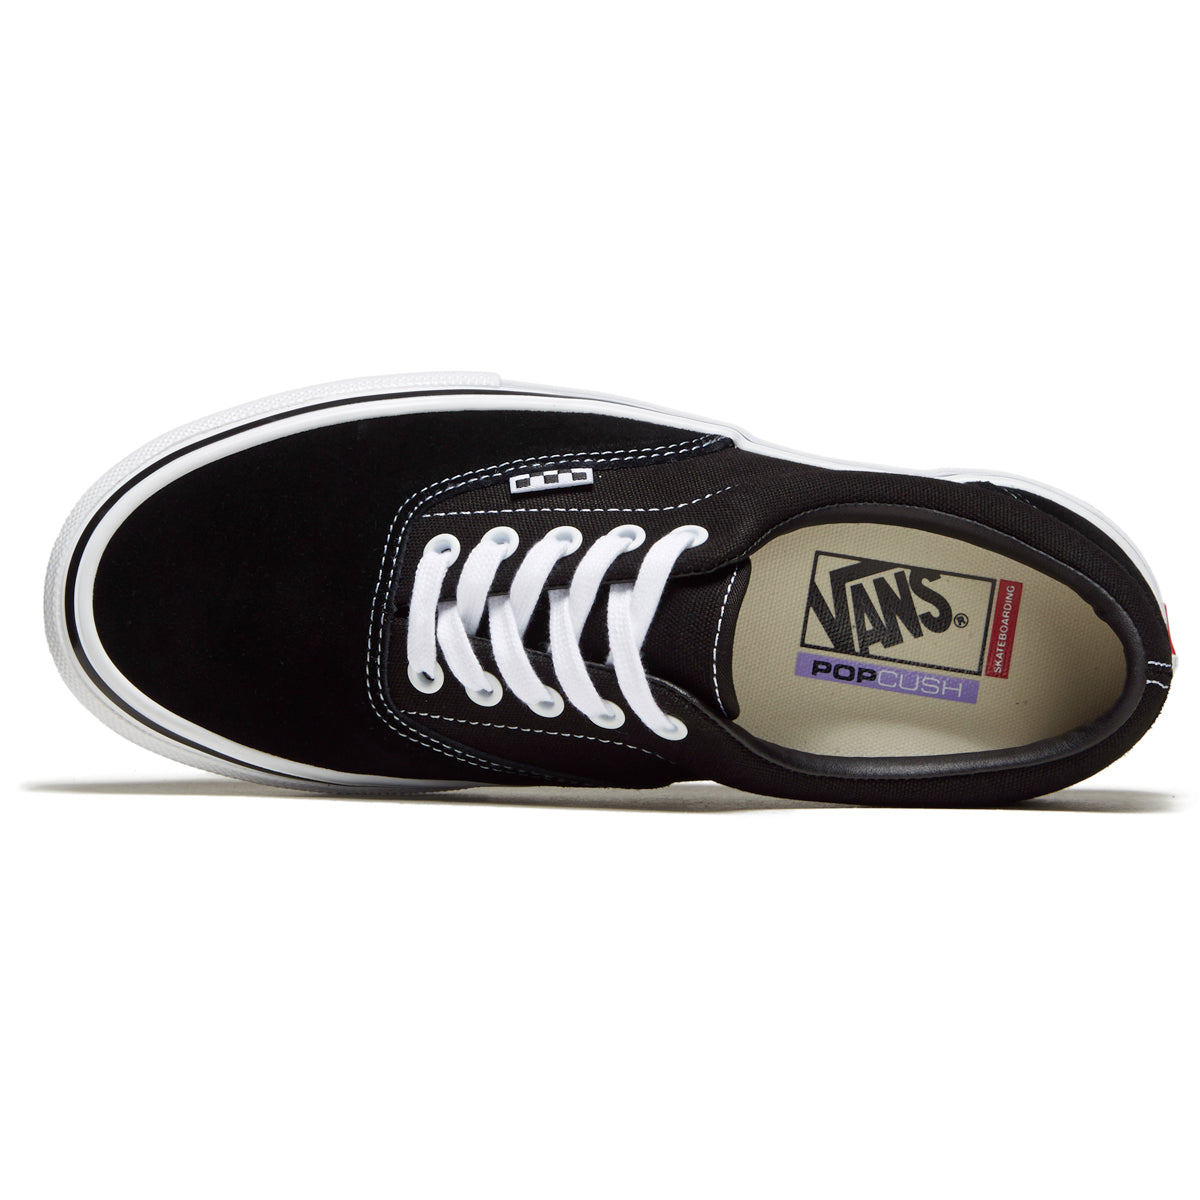 Vans Skate Era Shoes - Black/White image 3